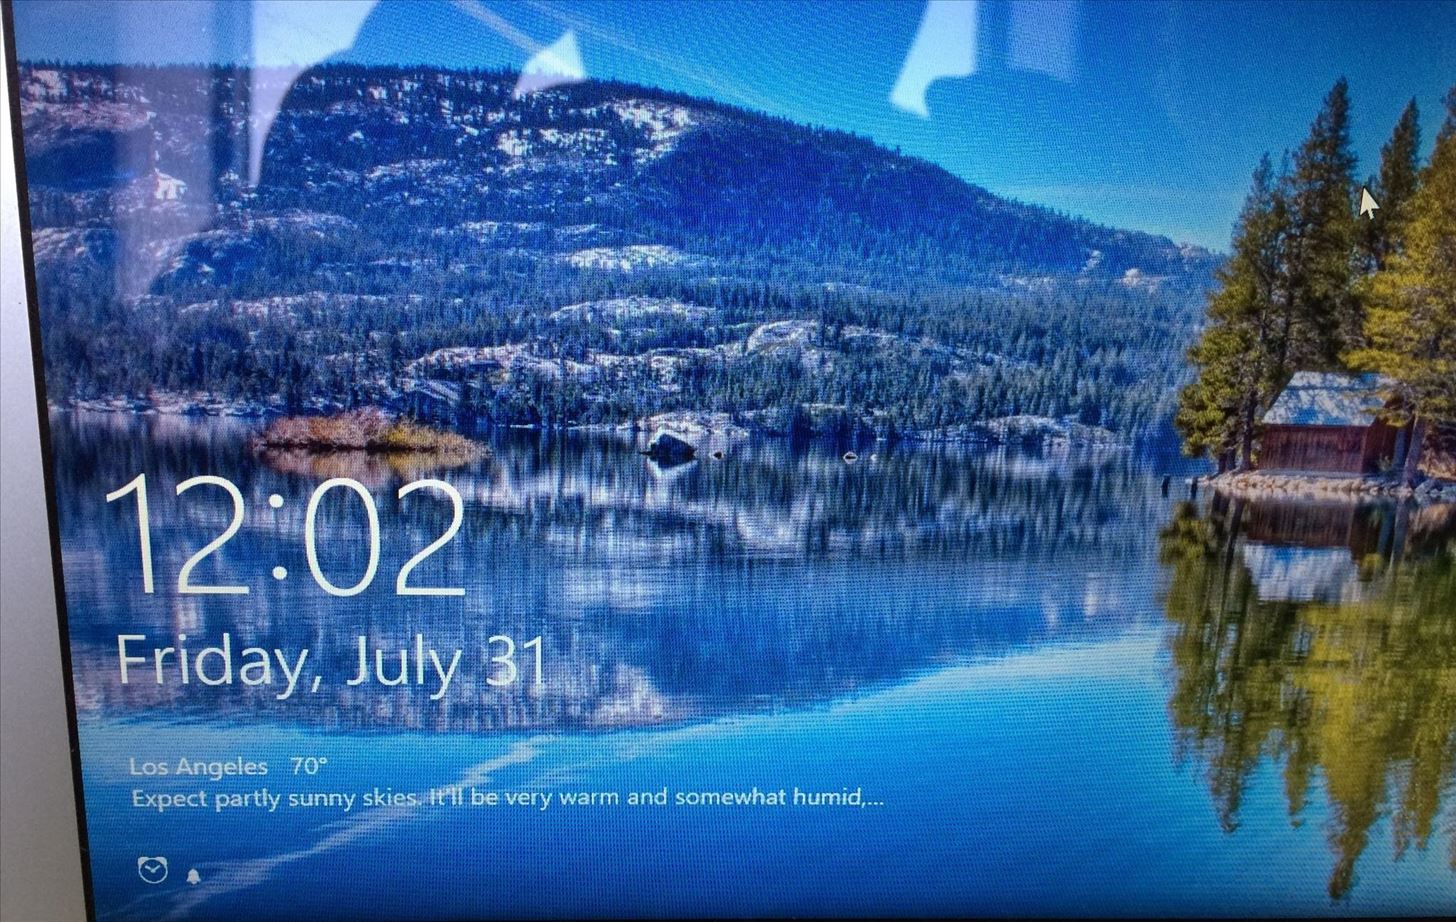 How To Customize The Windows 10 Lock Screen Hd Wallpaper Pine Tree 1456x922 Wallpaper Teahub Io